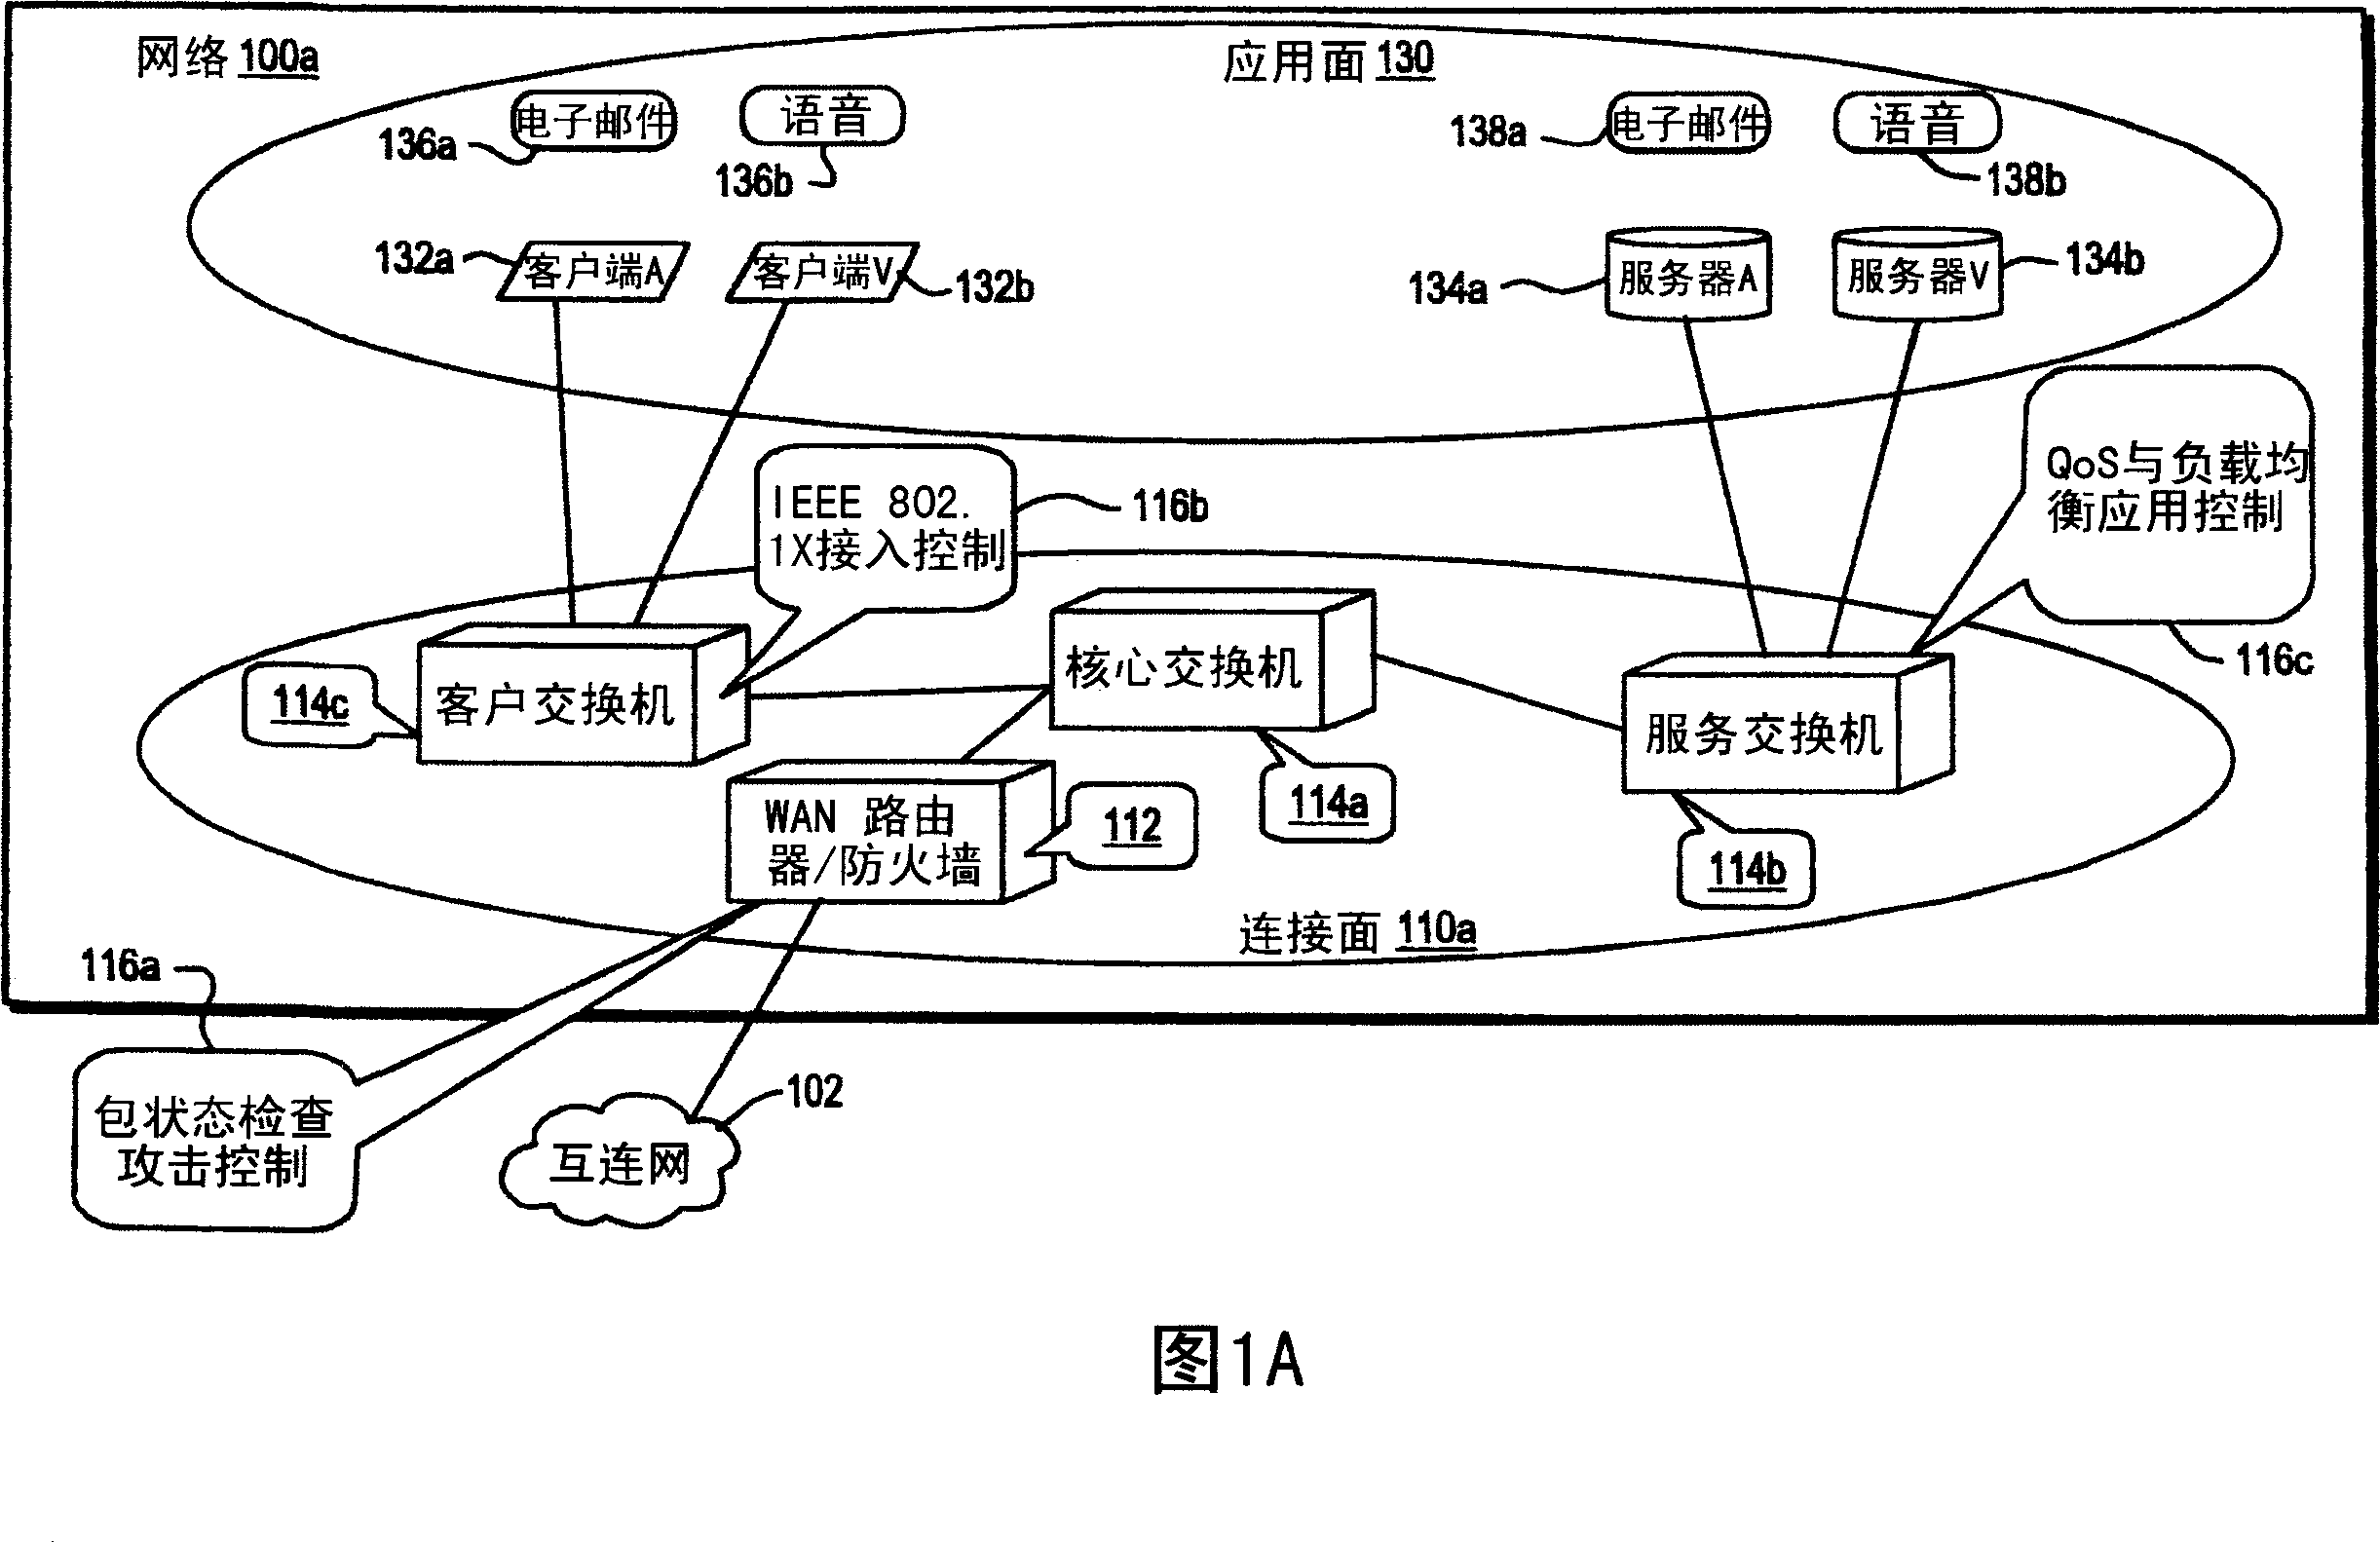 Bi-planar network architecture